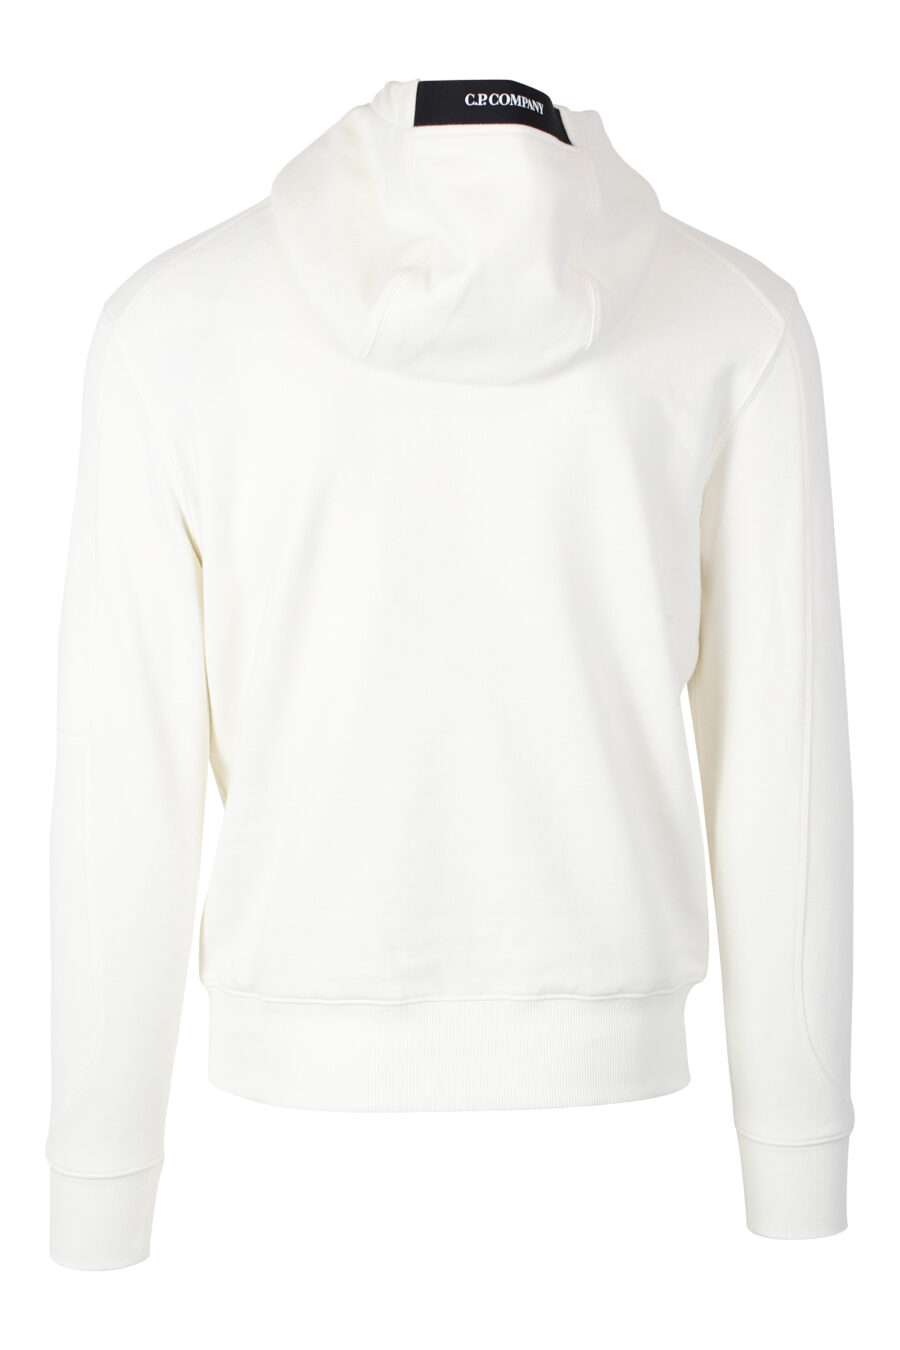 White sweatshirt with hood and circular mini-logo on the side - IMG 2388